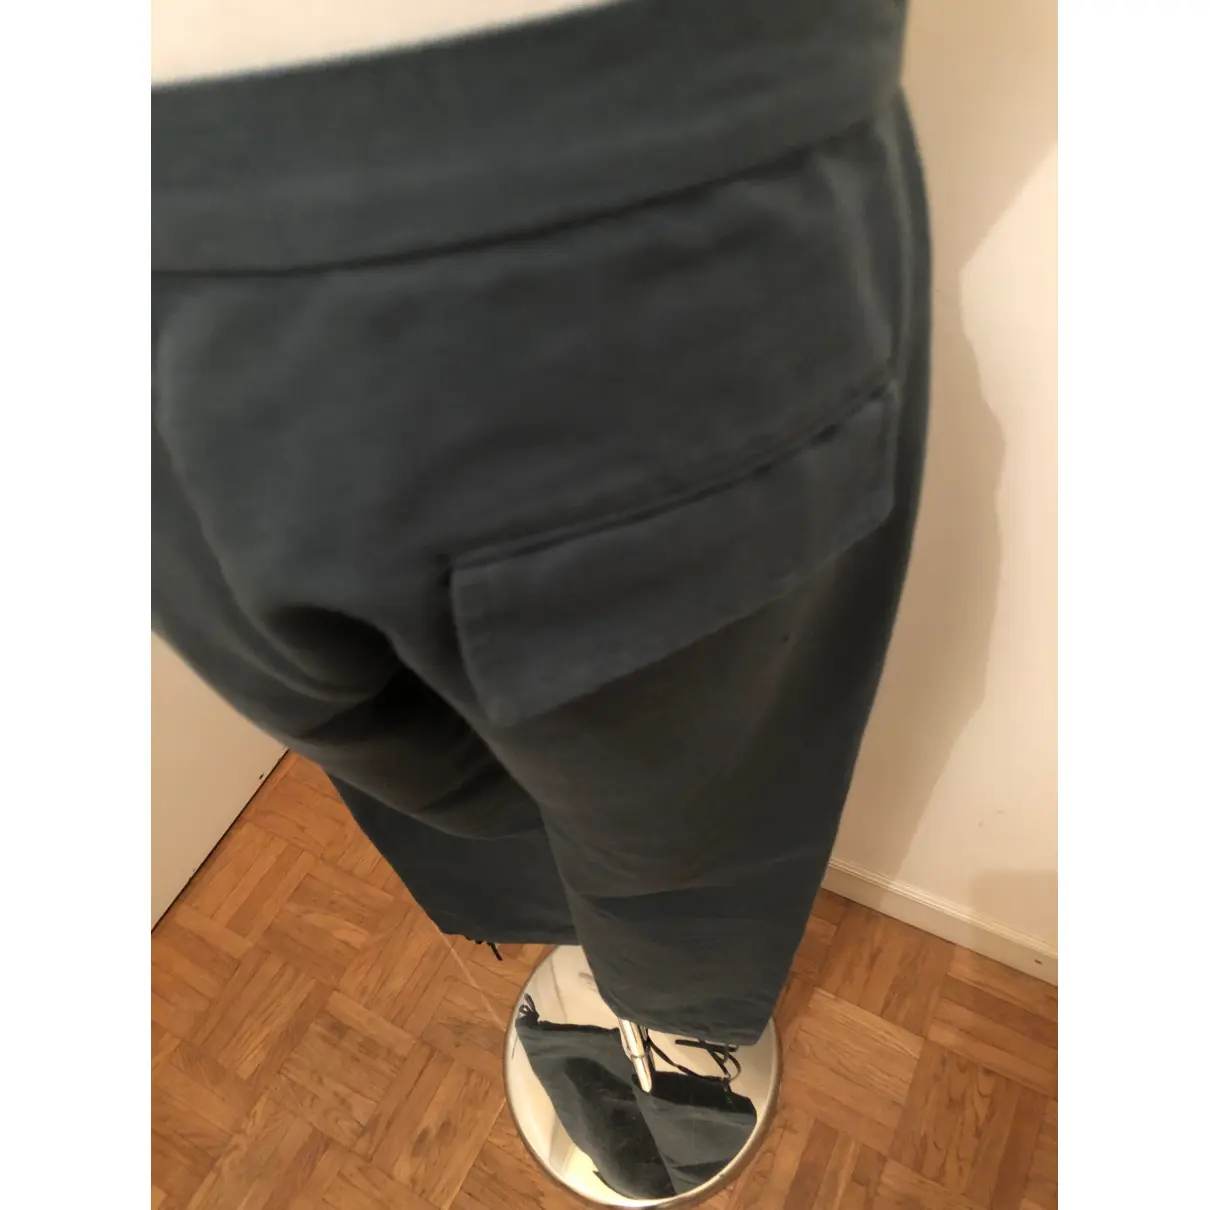 Trousers Isabel Marant